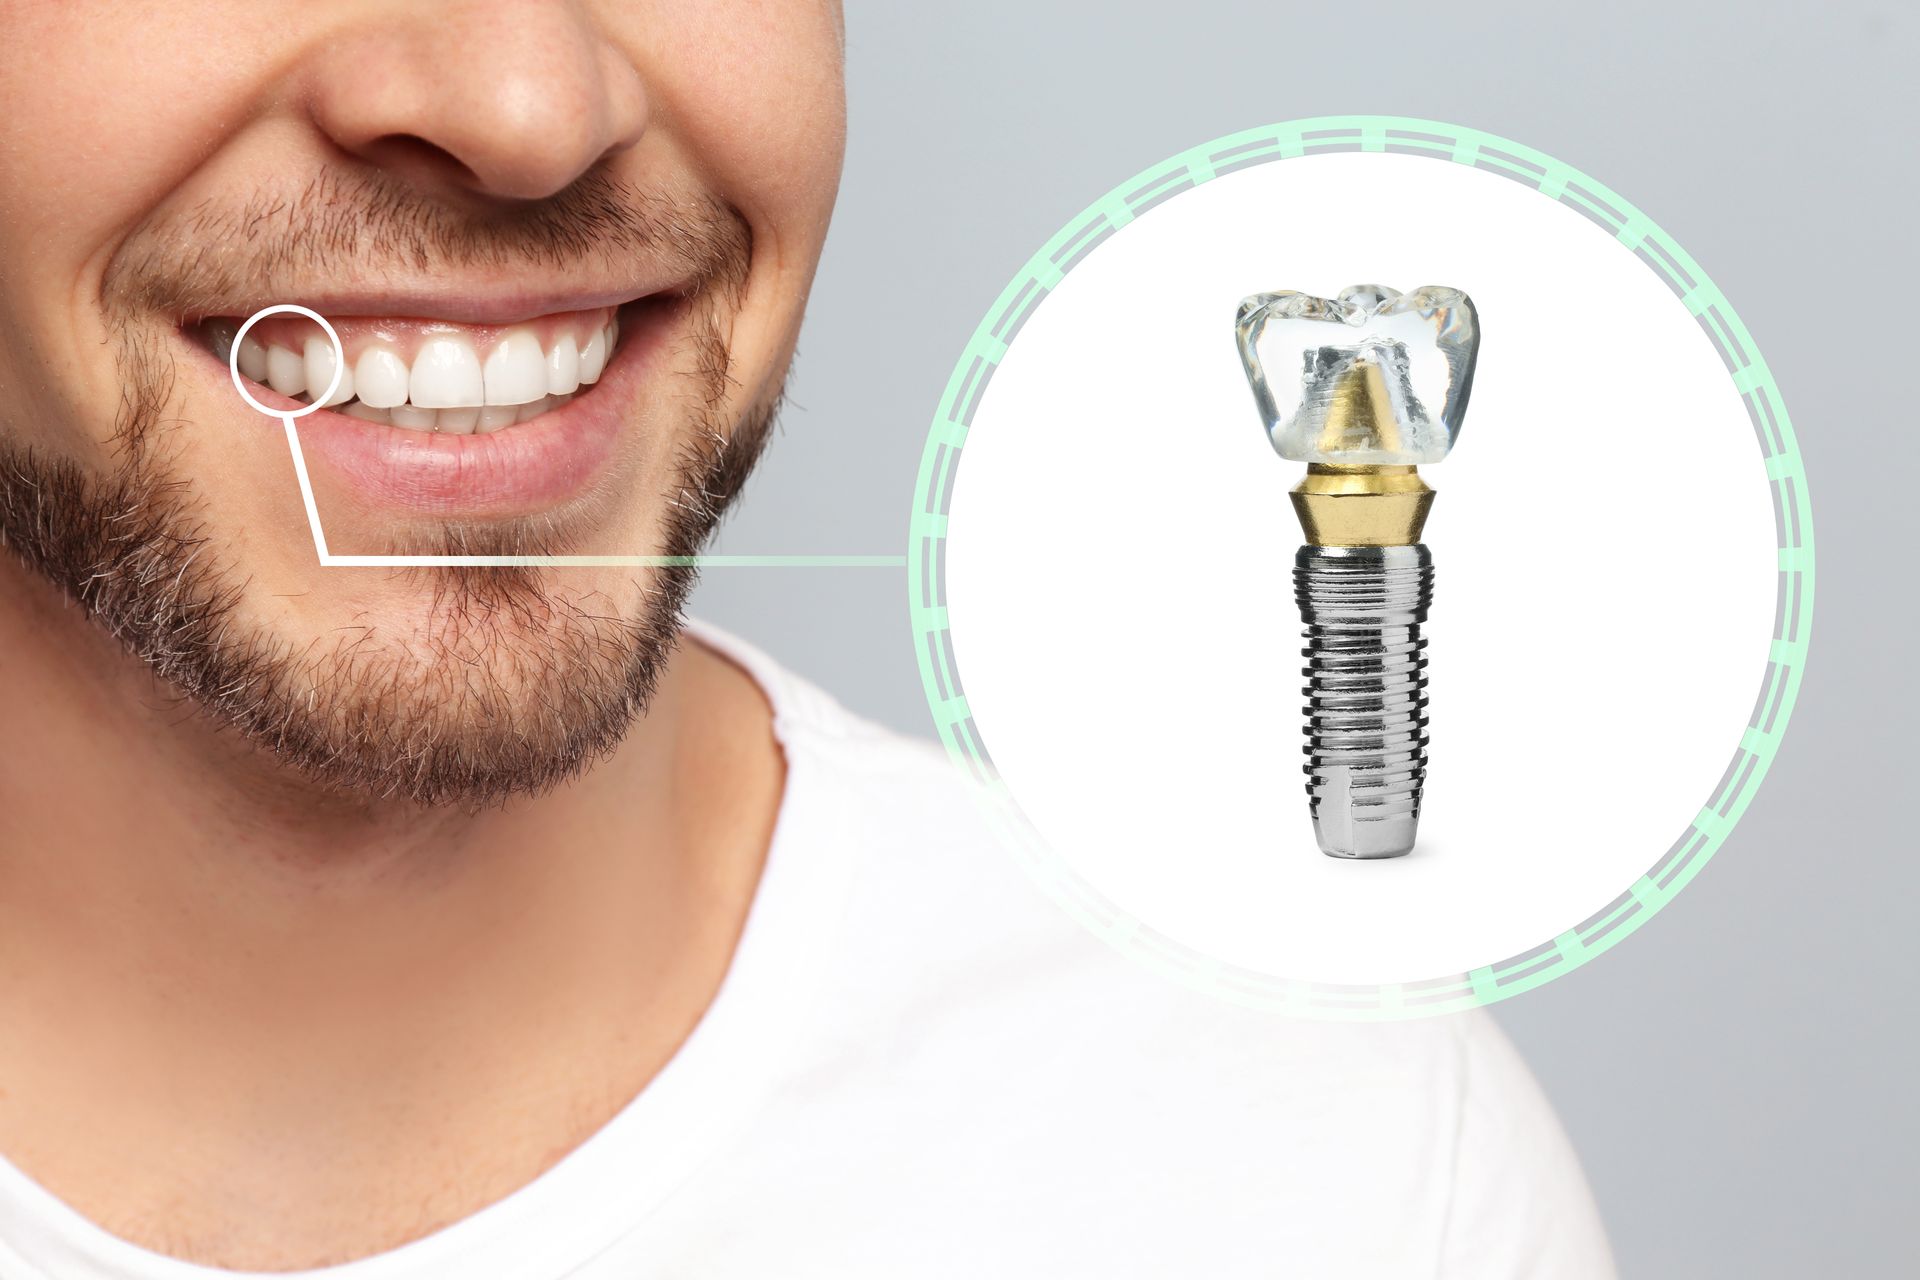 Silverstone Dental Implant